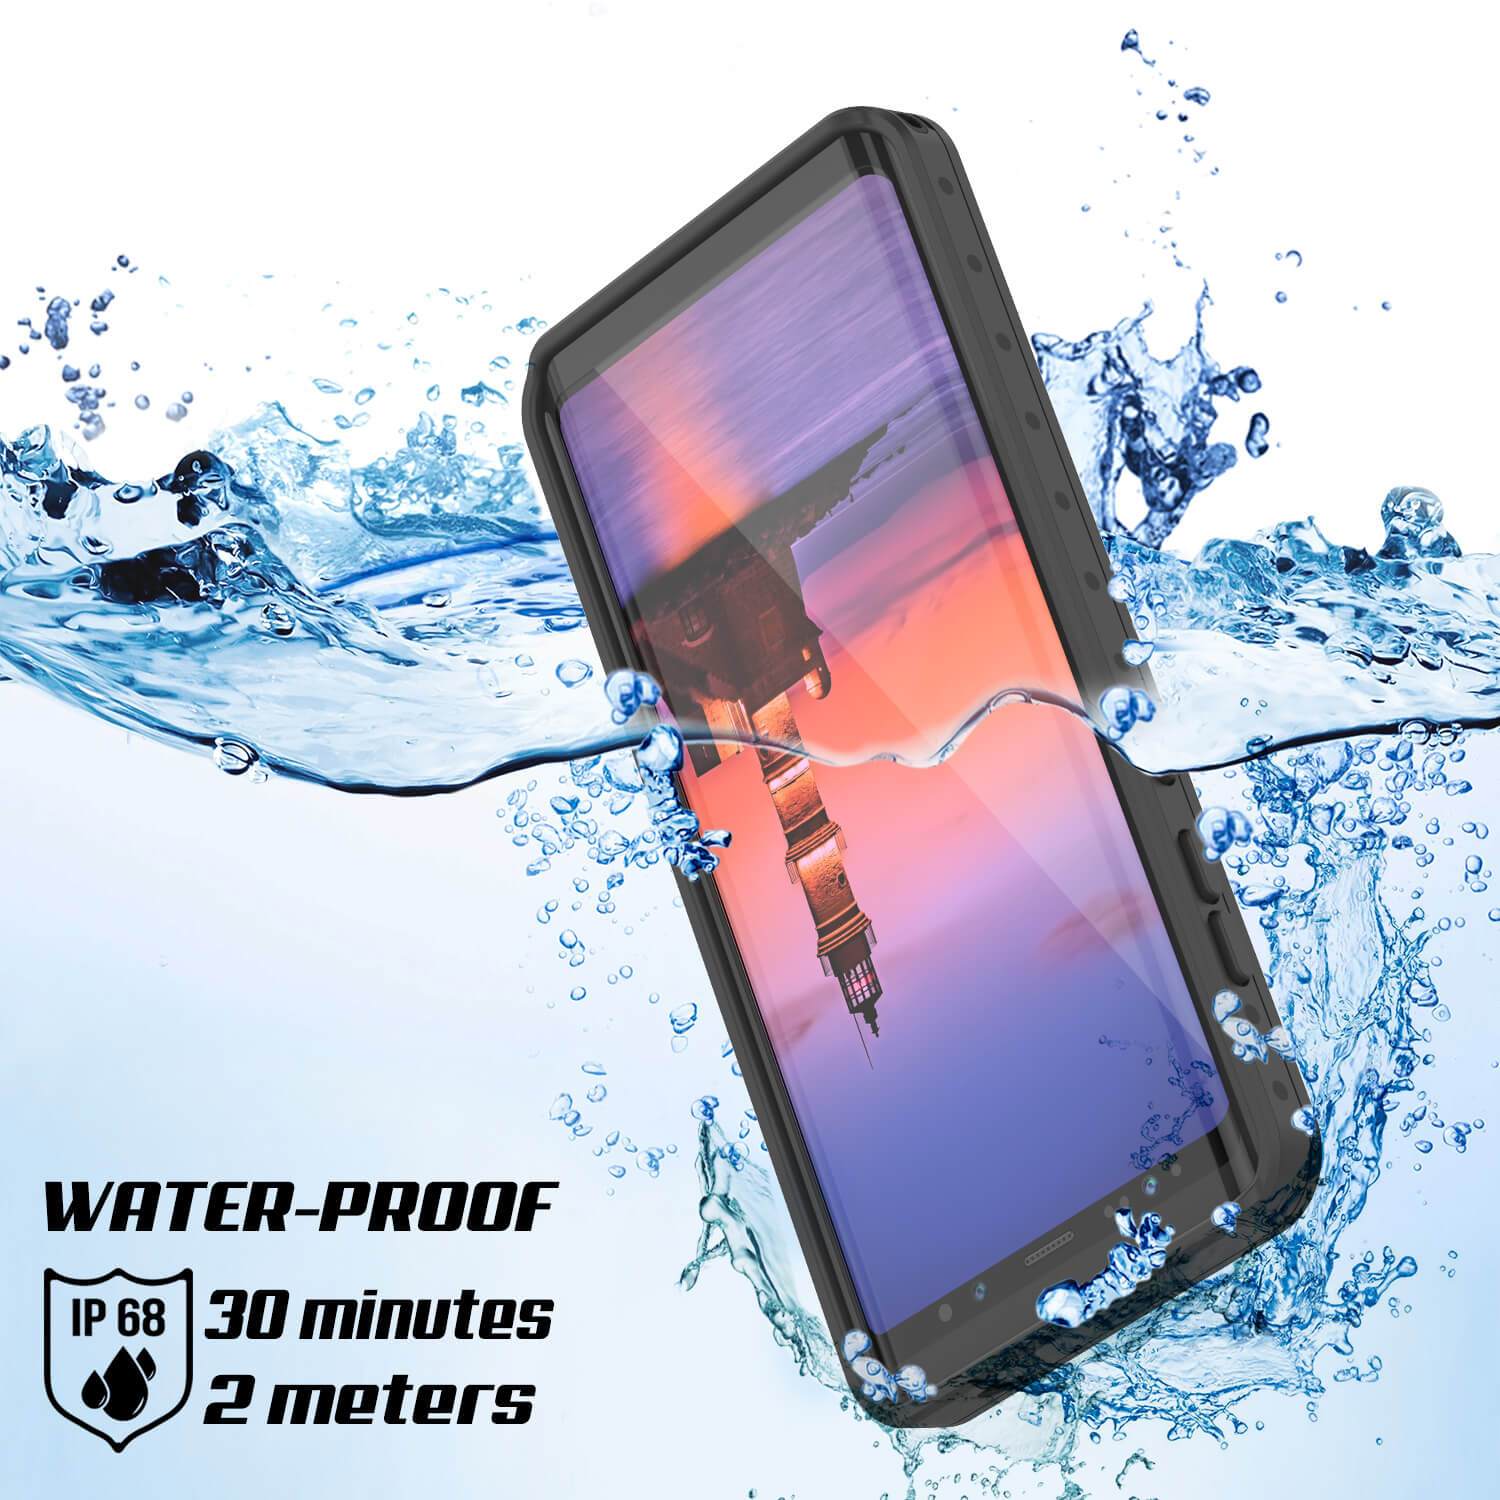 Galaxy Note 9 Waterproof Case Punkсase StudStar Clear Thin 6.6ft Underwater Shock/Snow Proof - PunkCase NZ